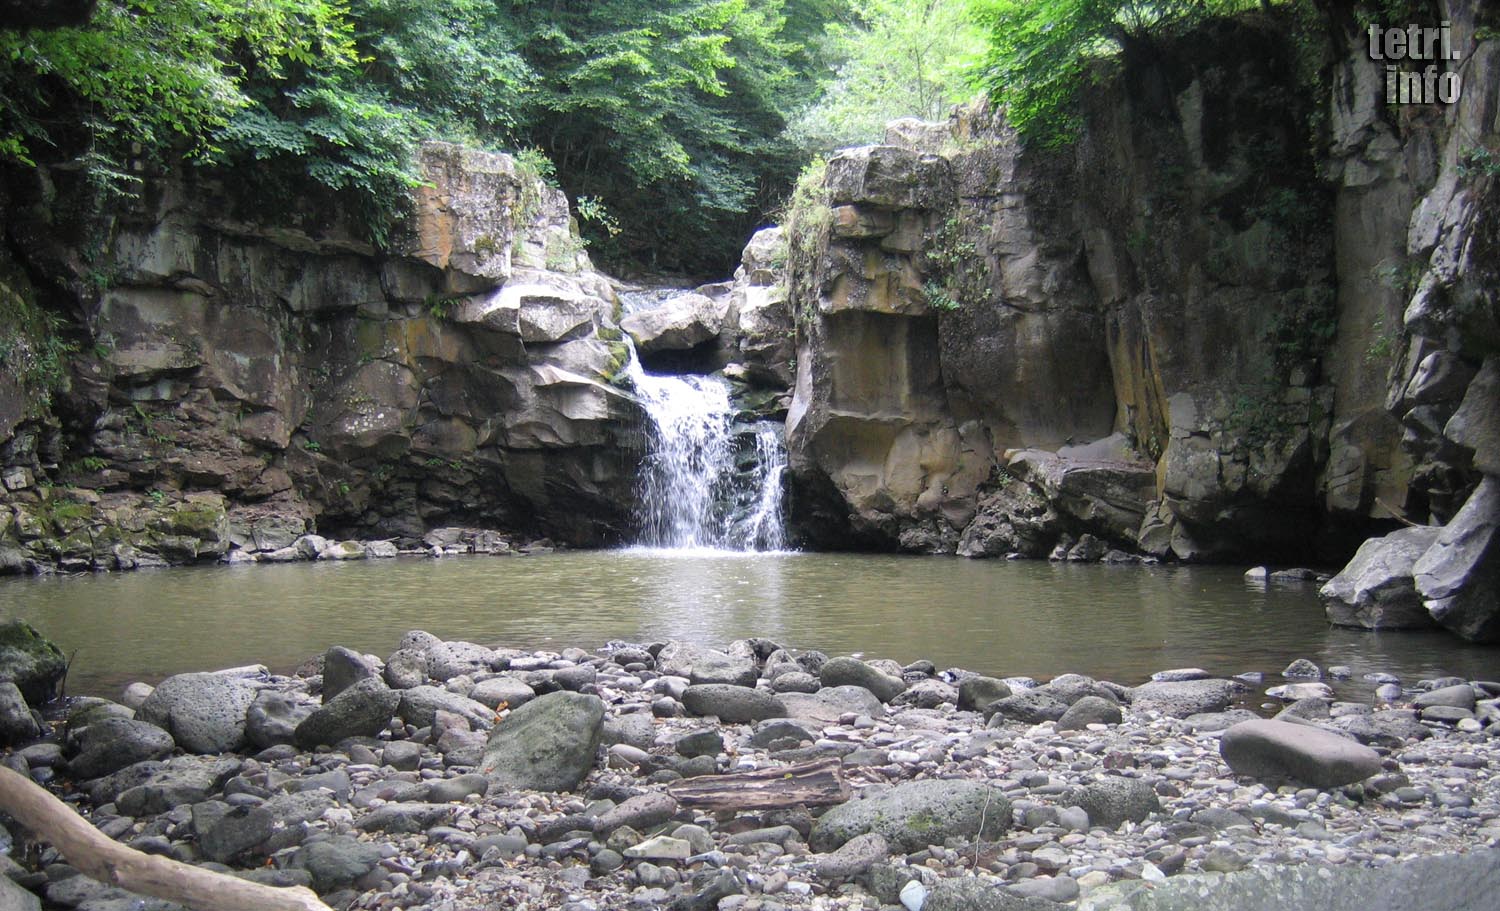 Водопад около Тетри-Цкаро (Tetri Tskaro) на реке Чивчави